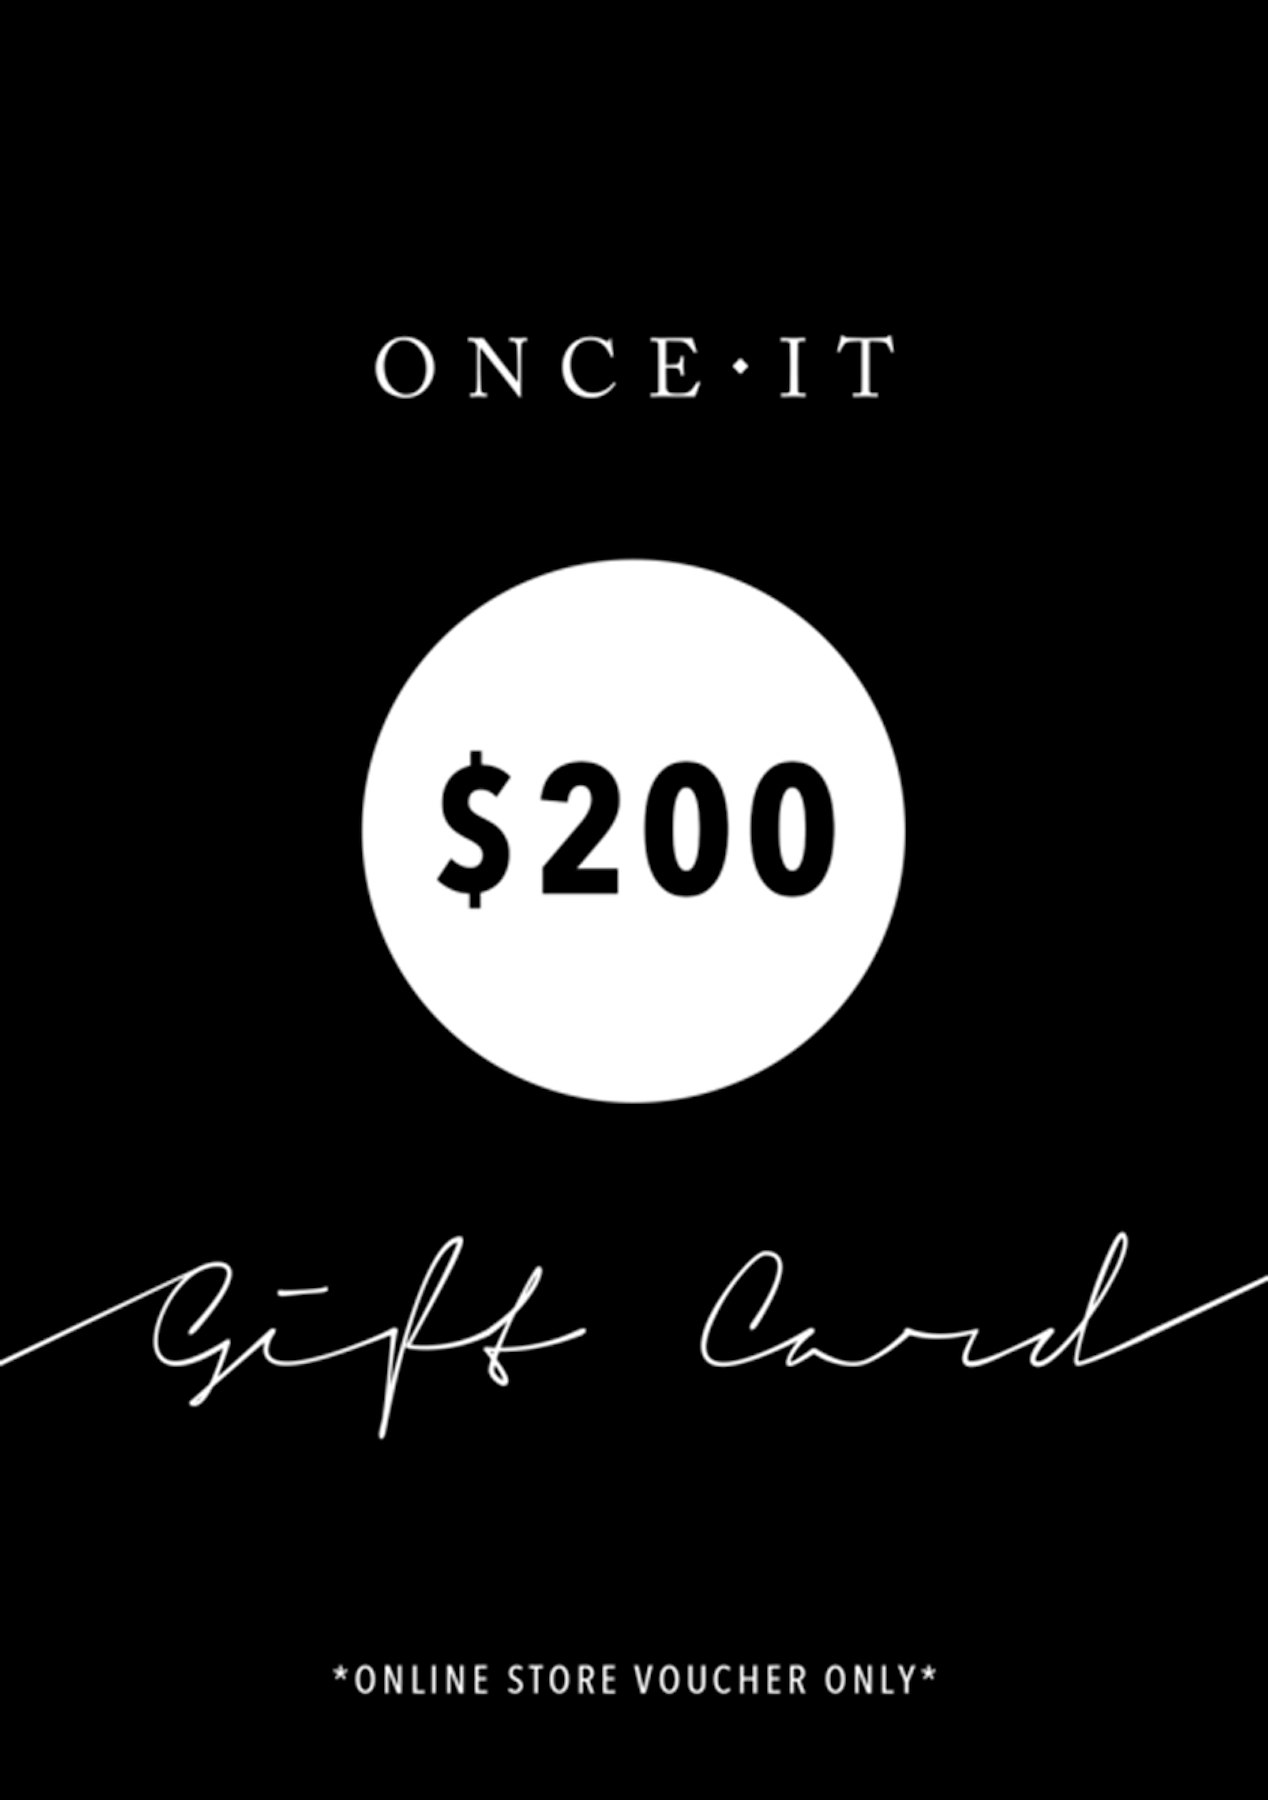 Onceit $200 Digital Gift Card